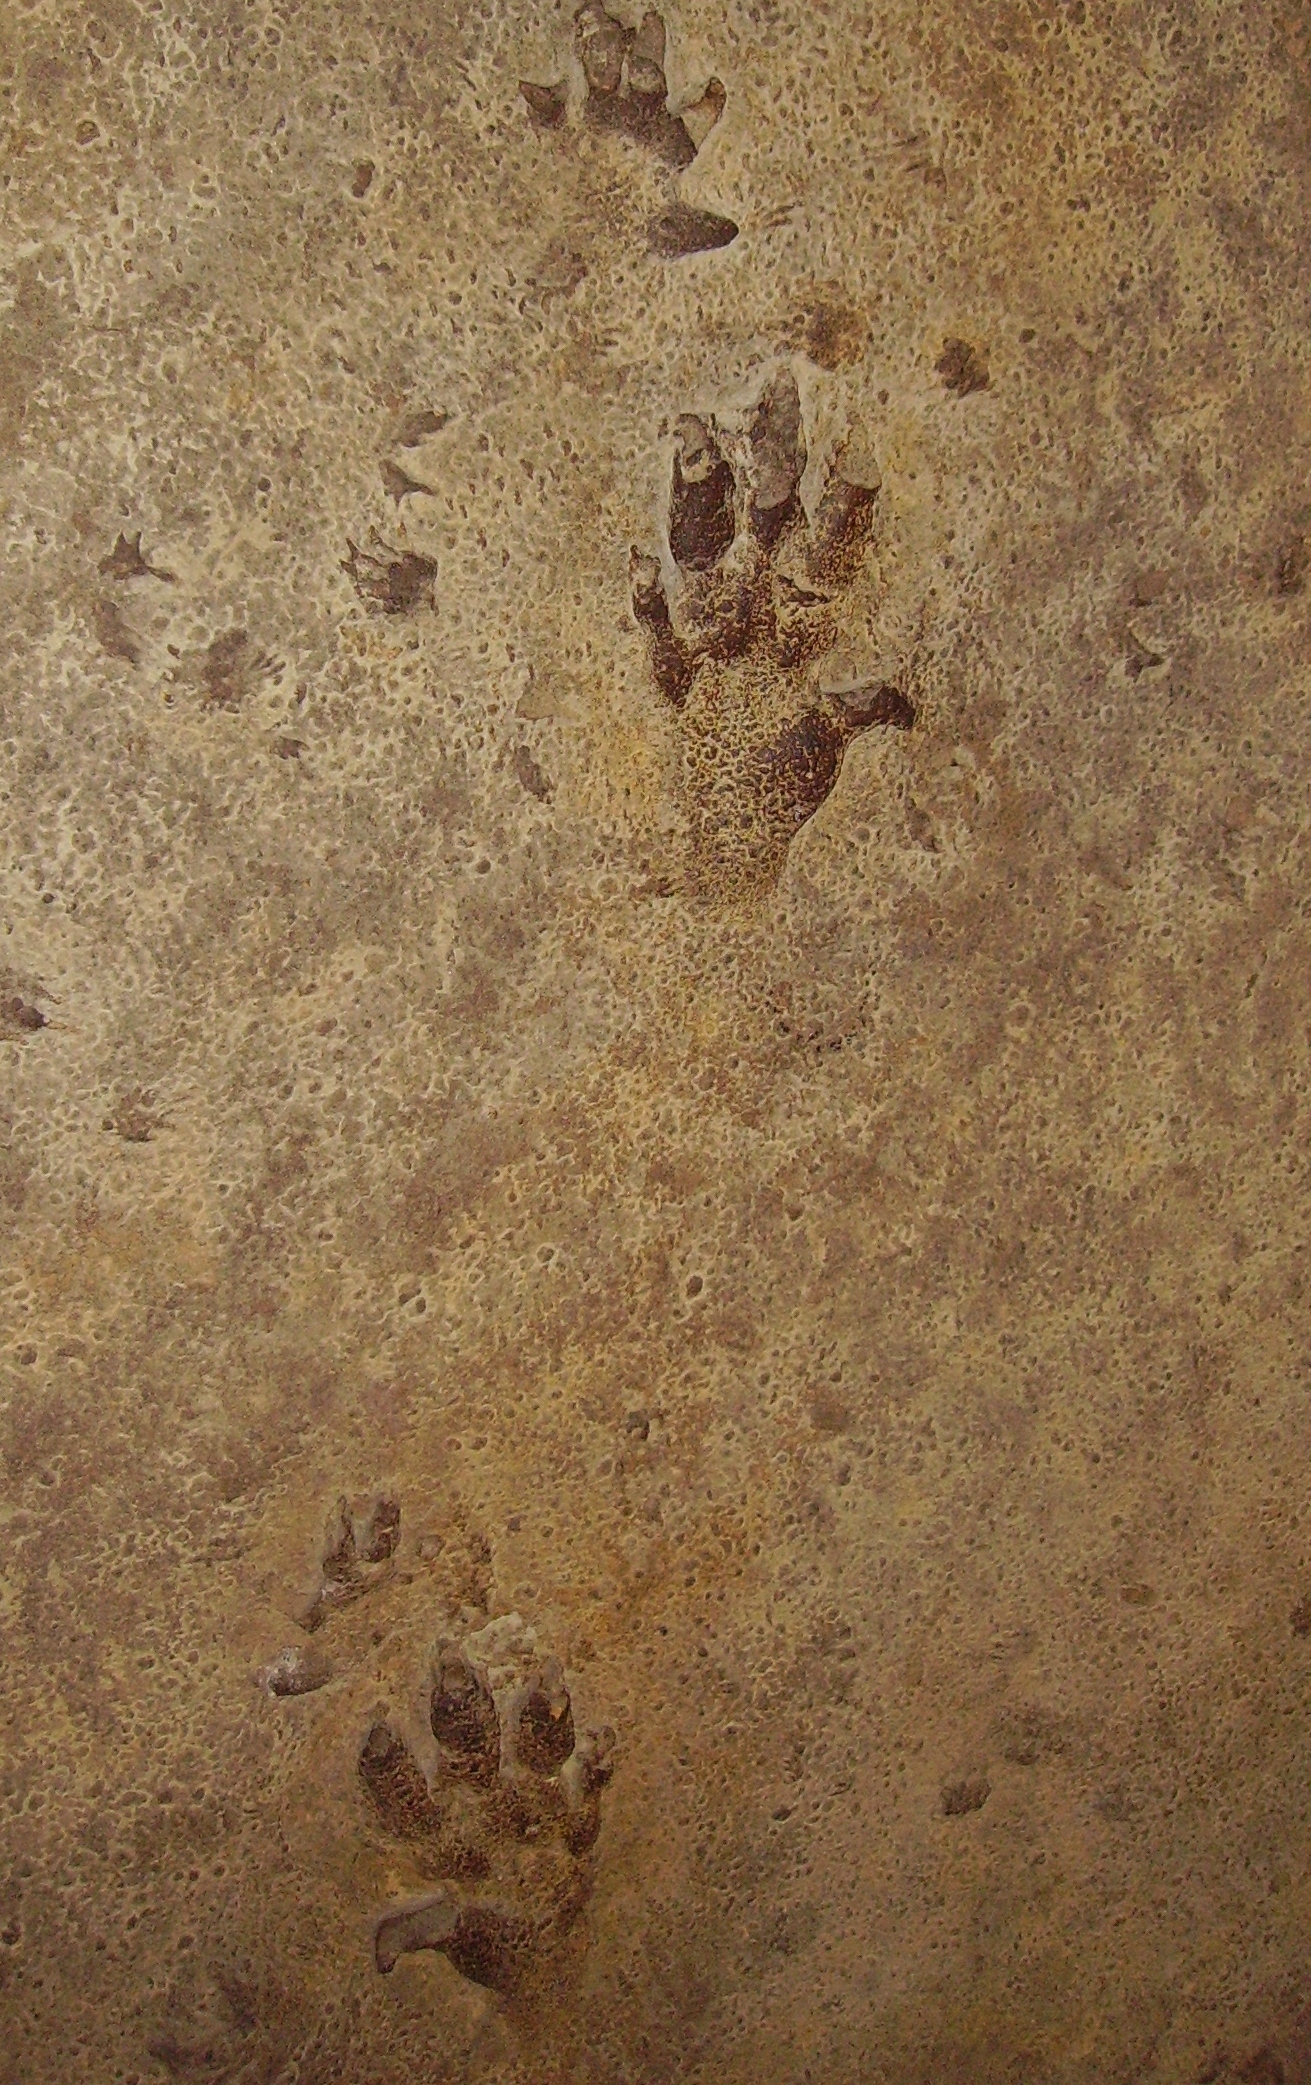 Tracks of a small dinosaur